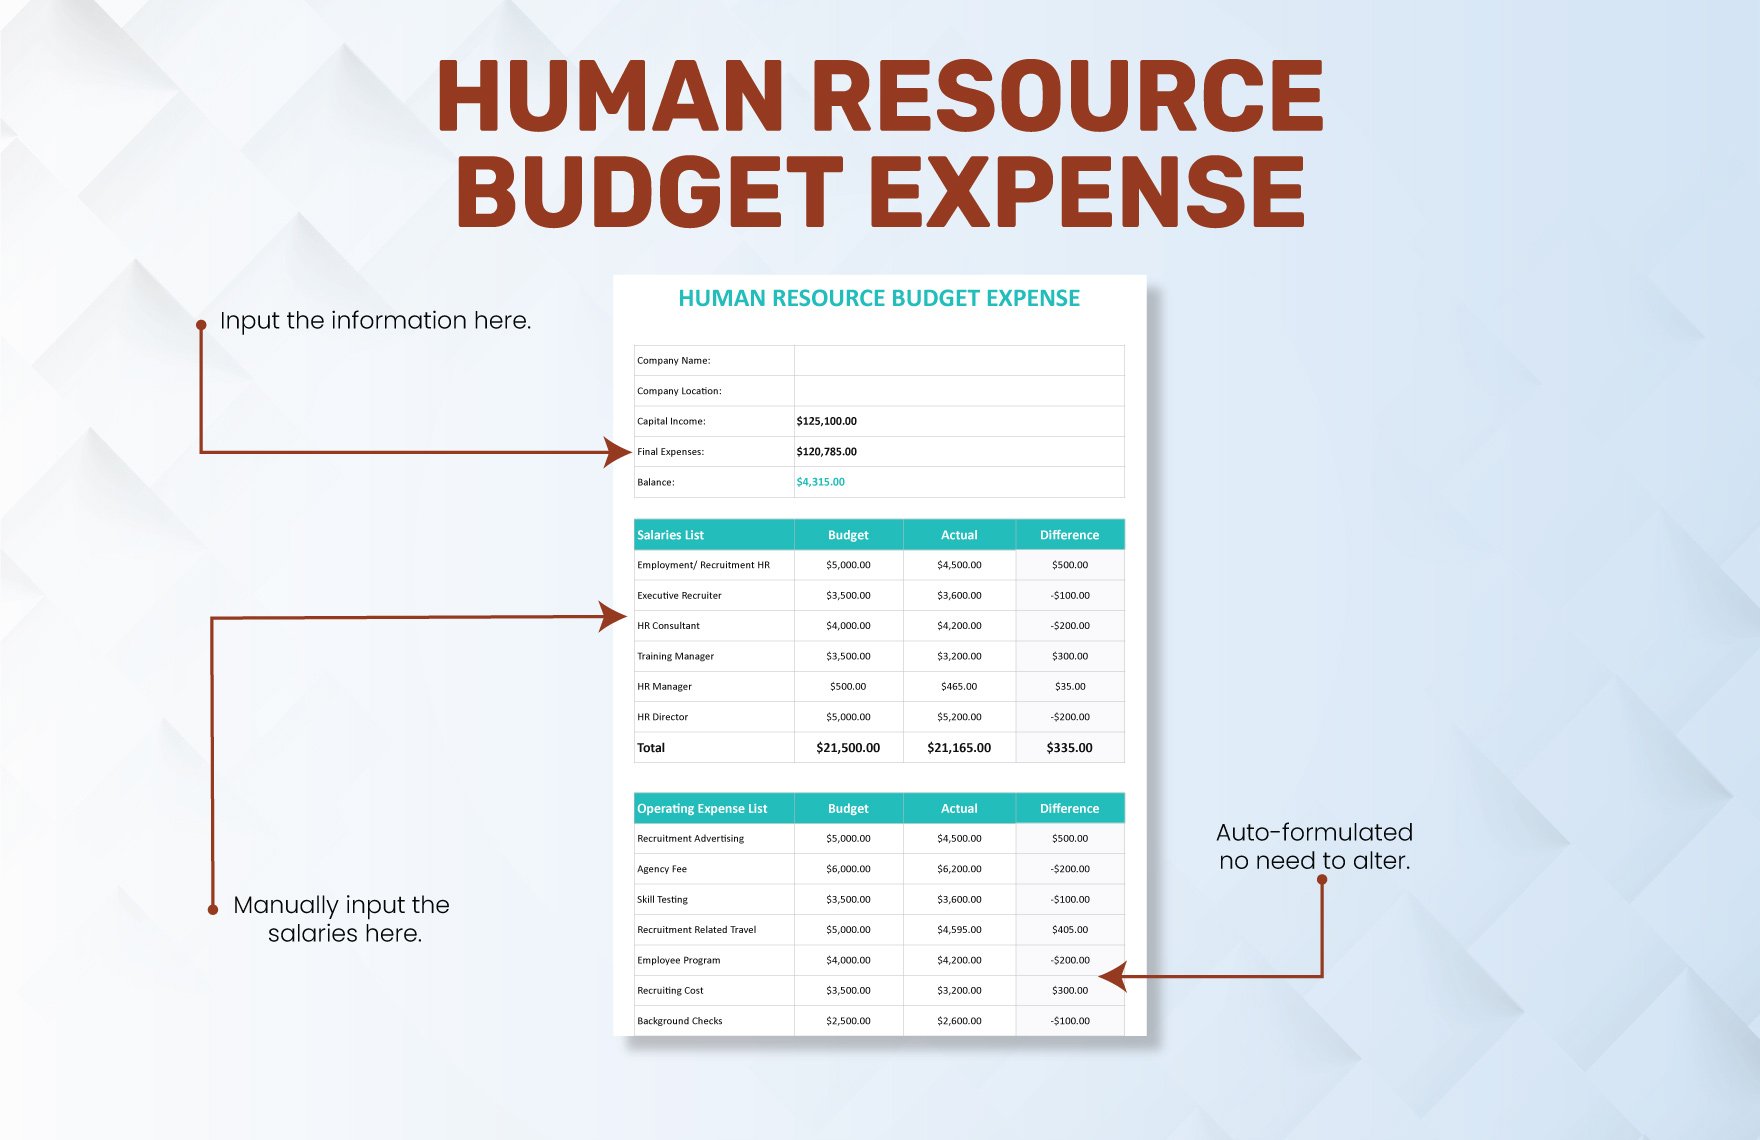 Human Resource Budget Expense Template